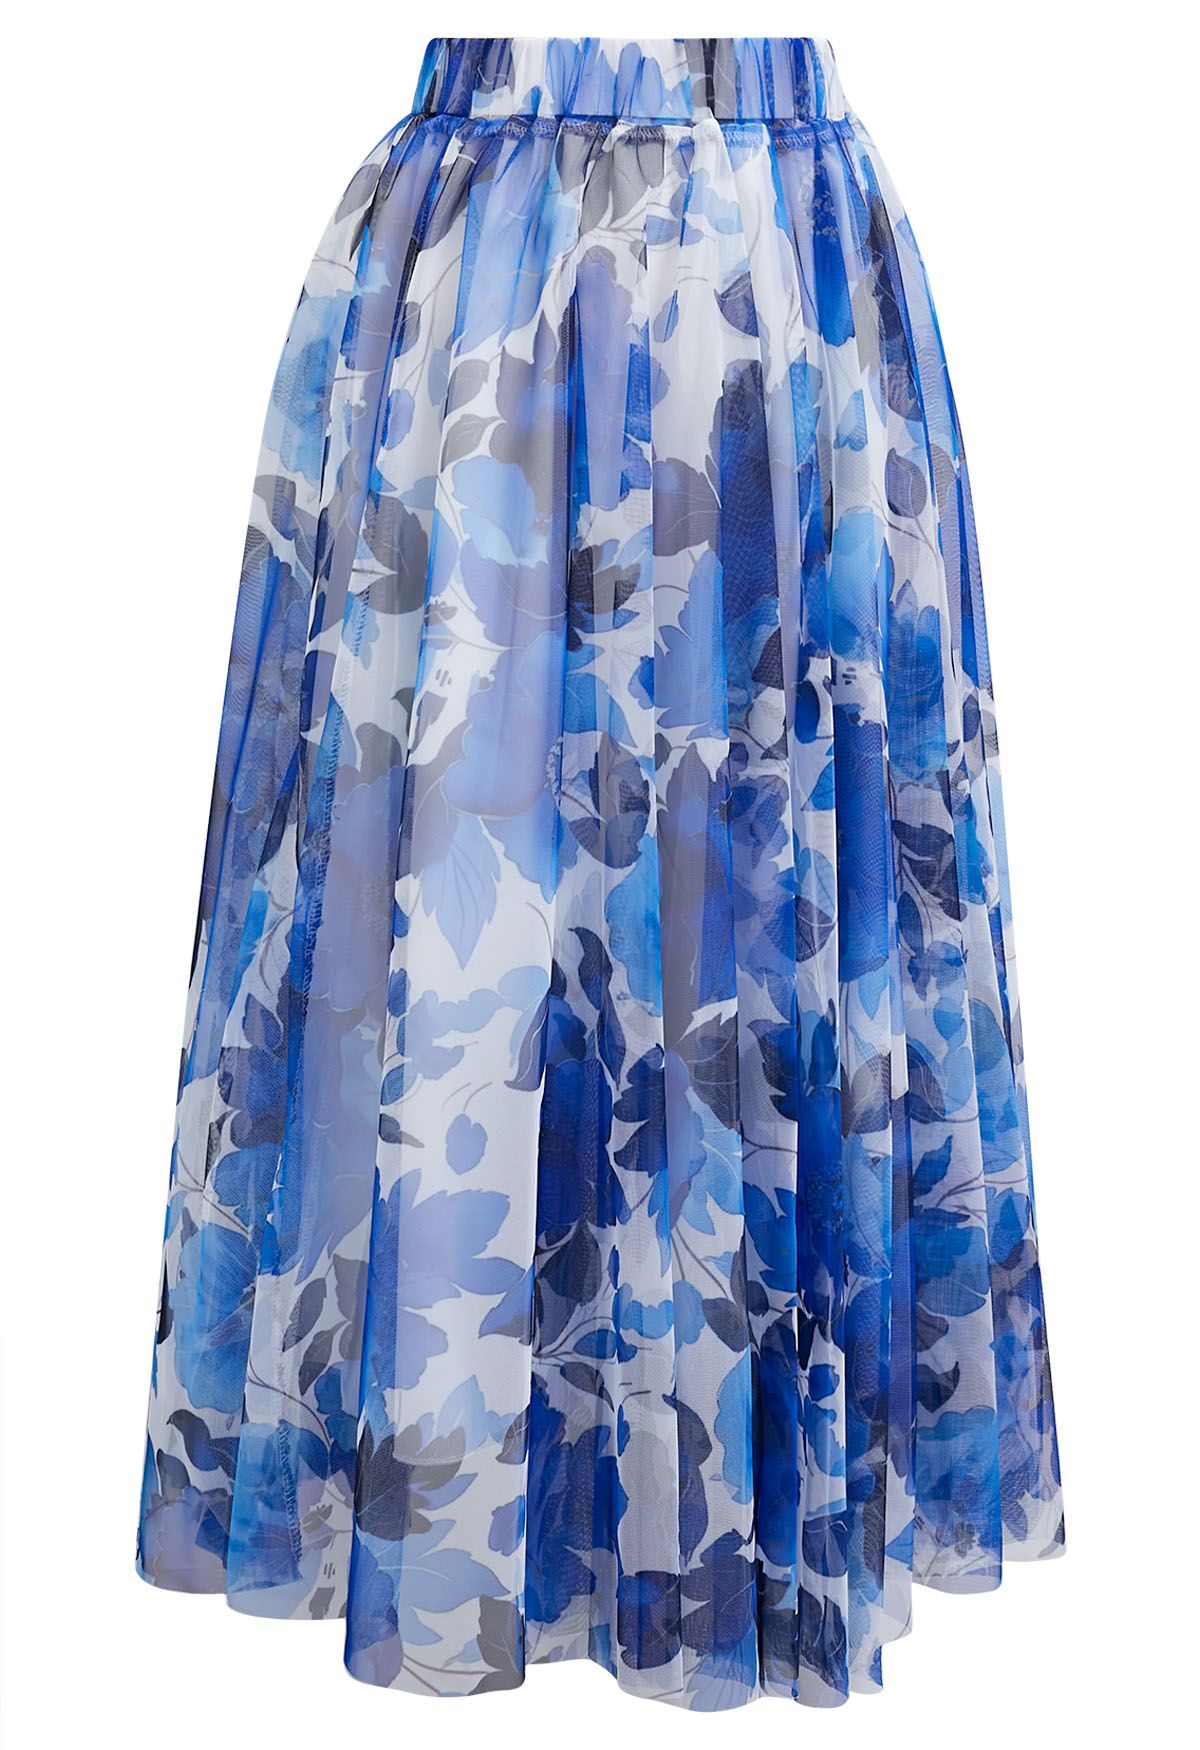 Dancing in Flowers Blue Watercolor Mesh Tulle Skirt 